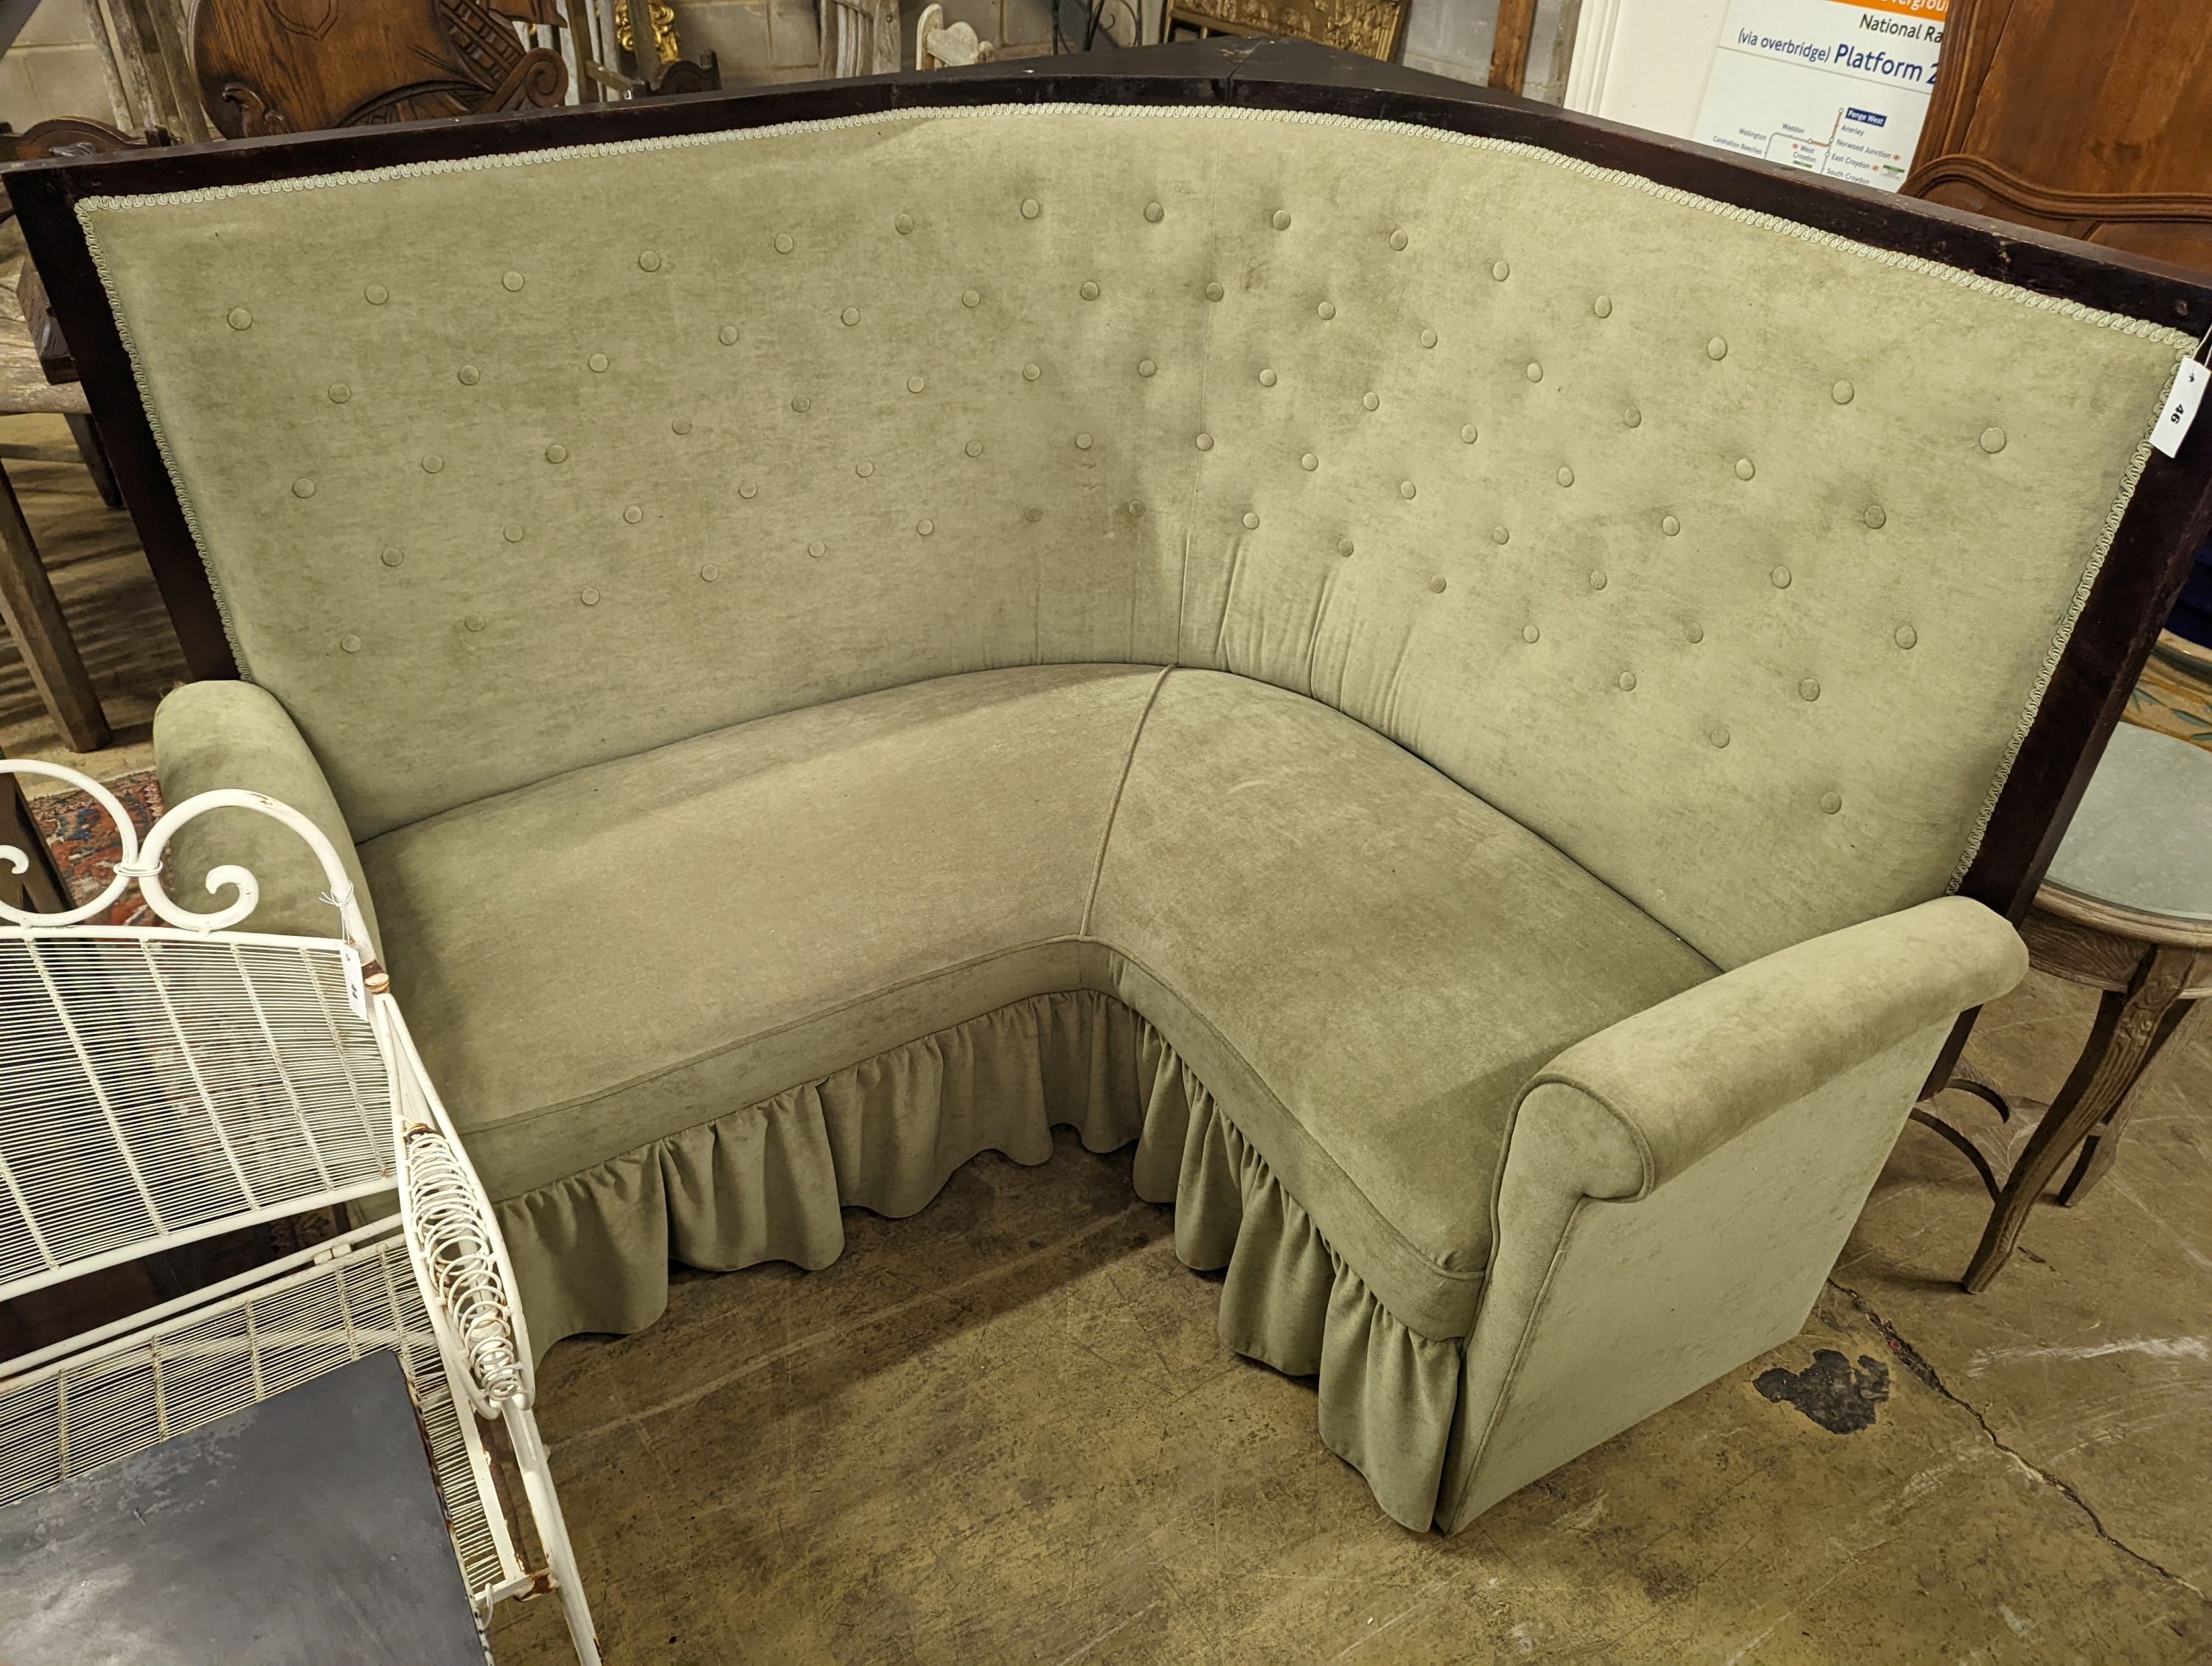 A vintage corner seat, length 128cm, depth 146cm, height 122cm